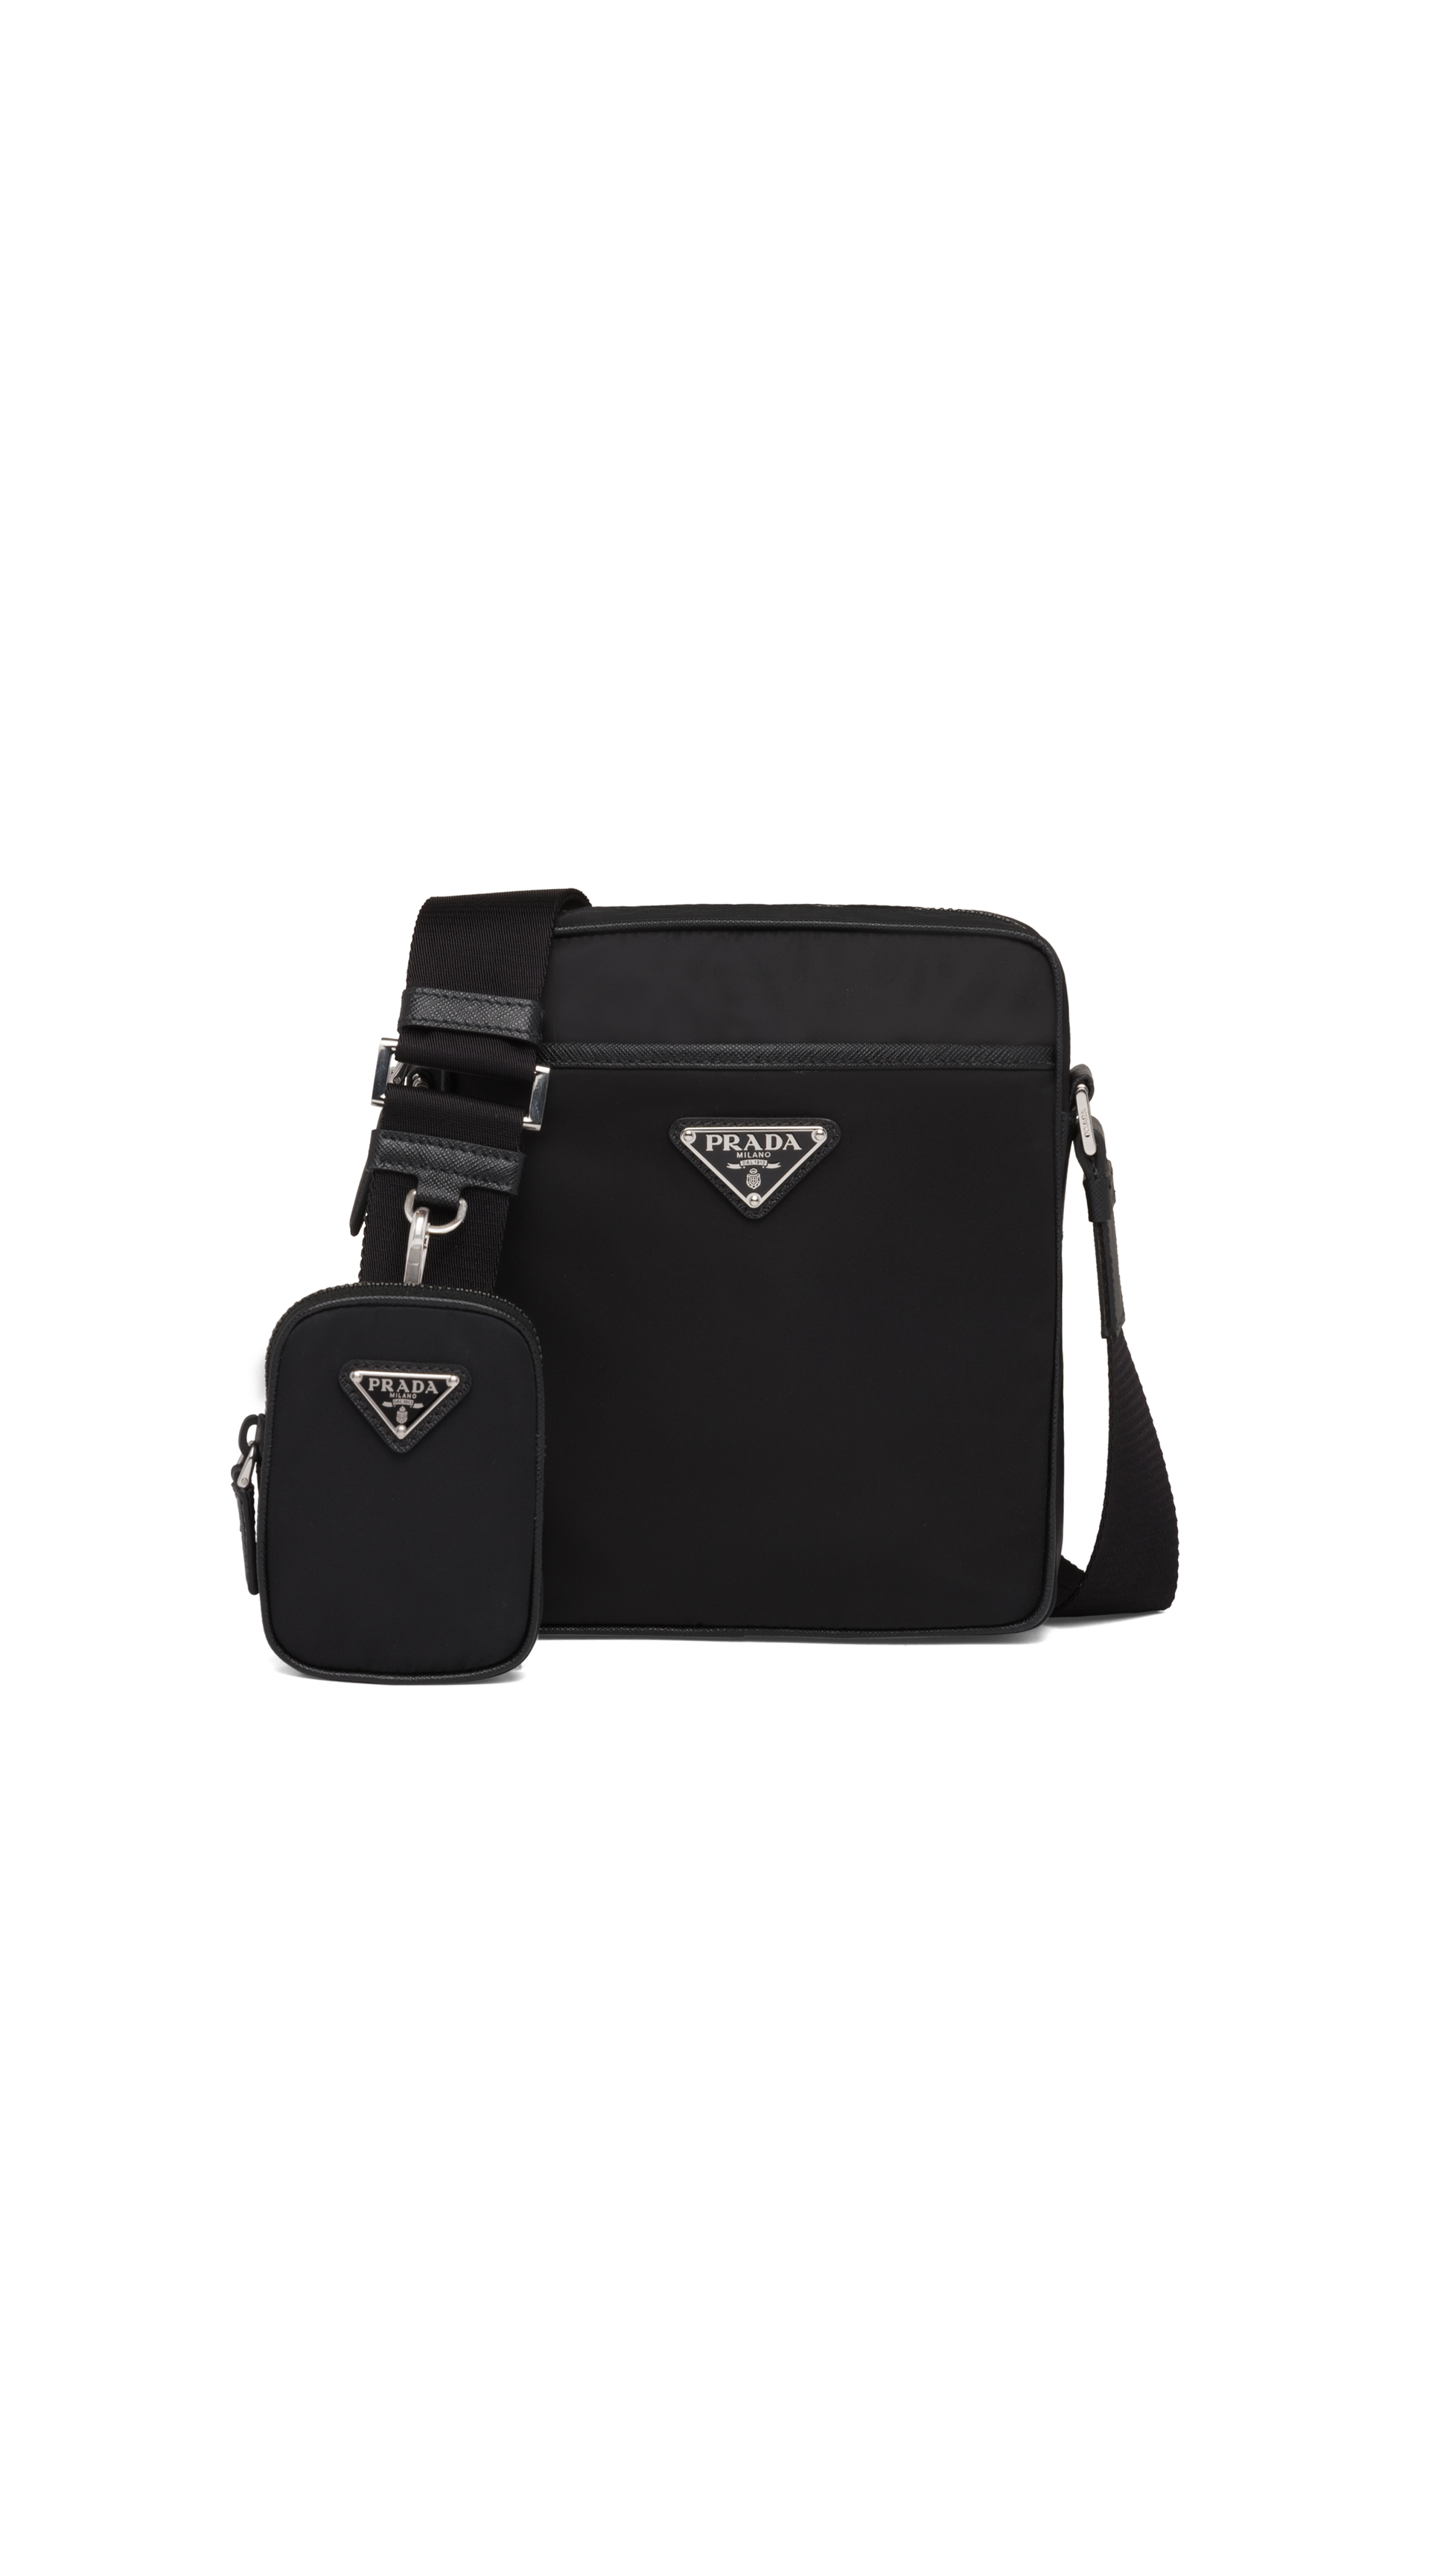 Prada Re-Nylon Saffiano Leather Shoulder Bag in Black